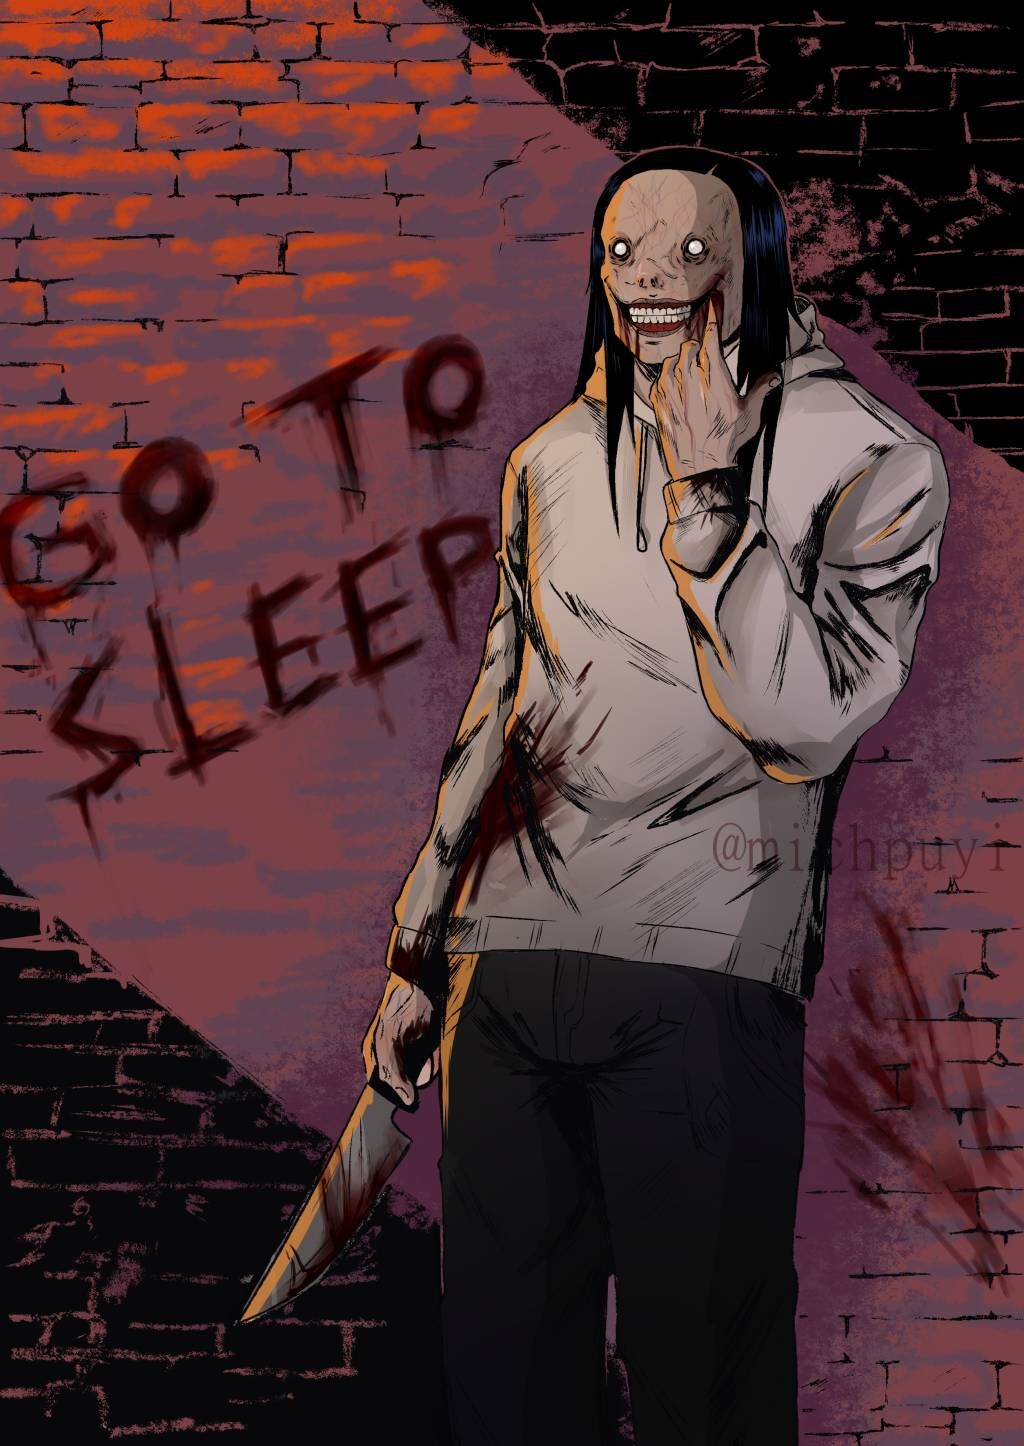 Jeff the Killer, an art print by GlitchWitch.jpg - INPRNT